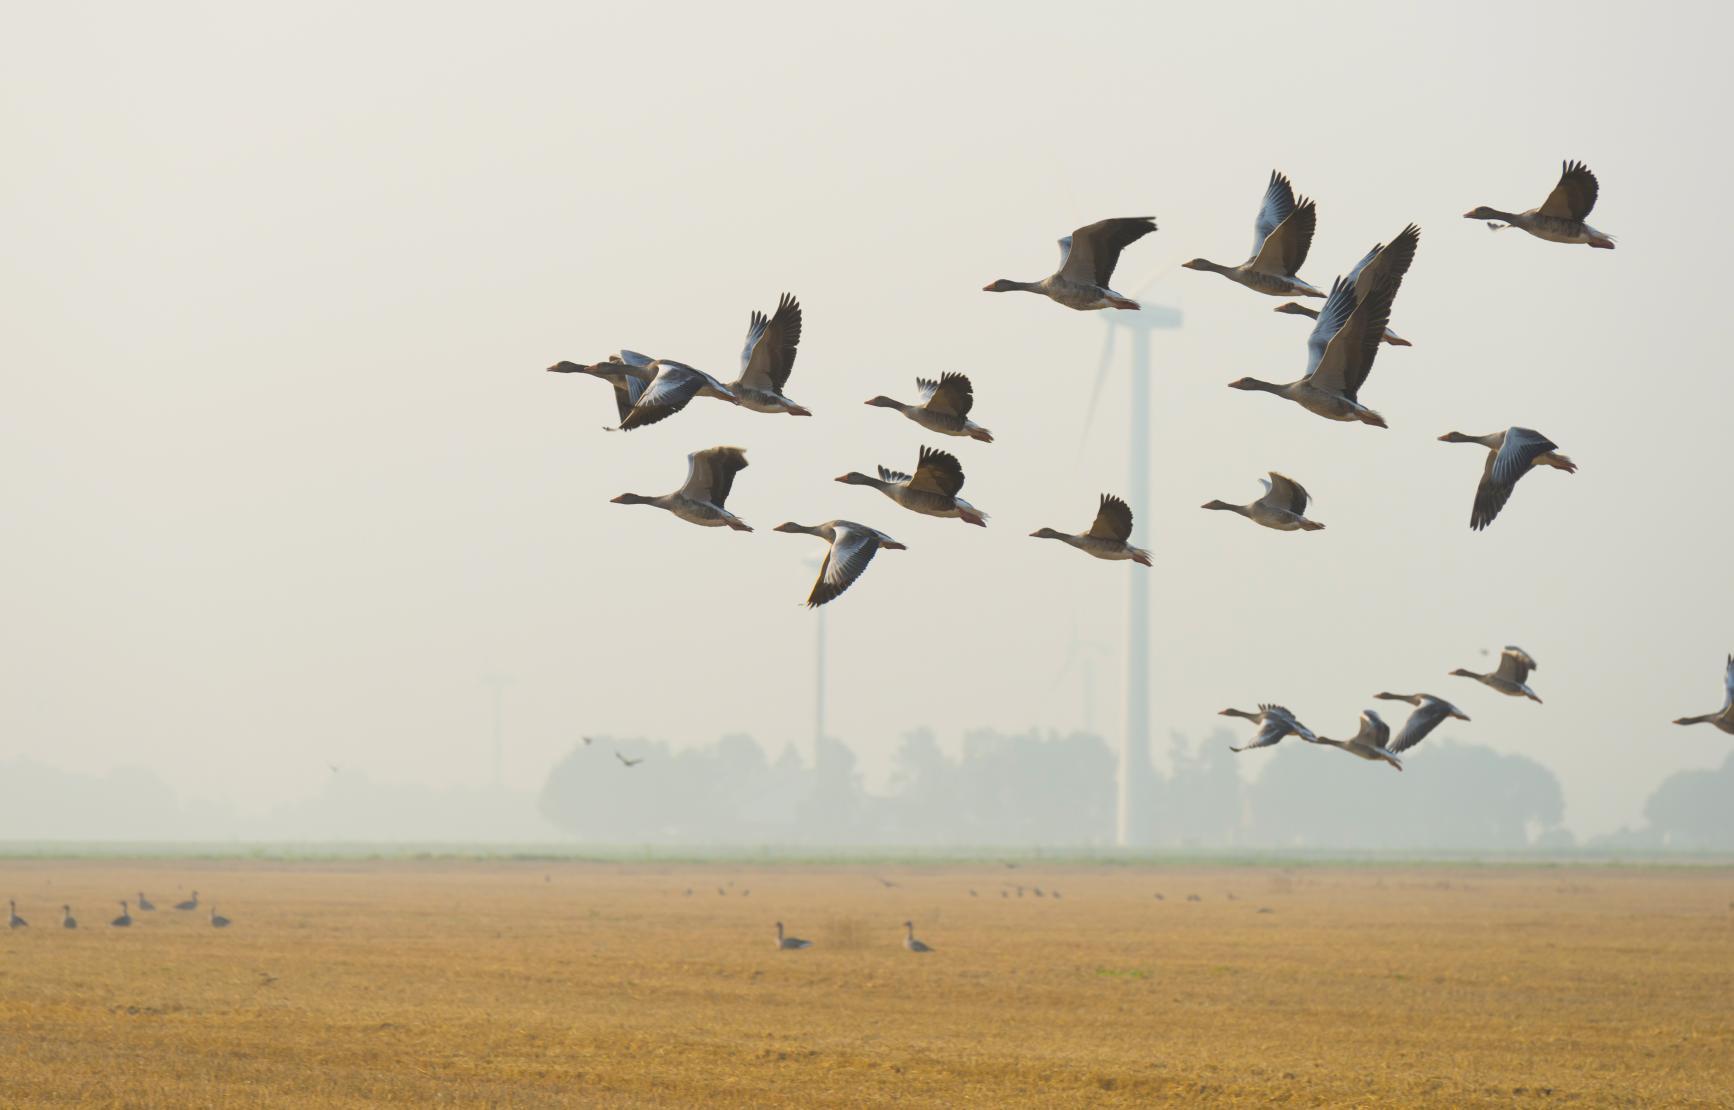 A flock of birds flying through the sky on a misty day.